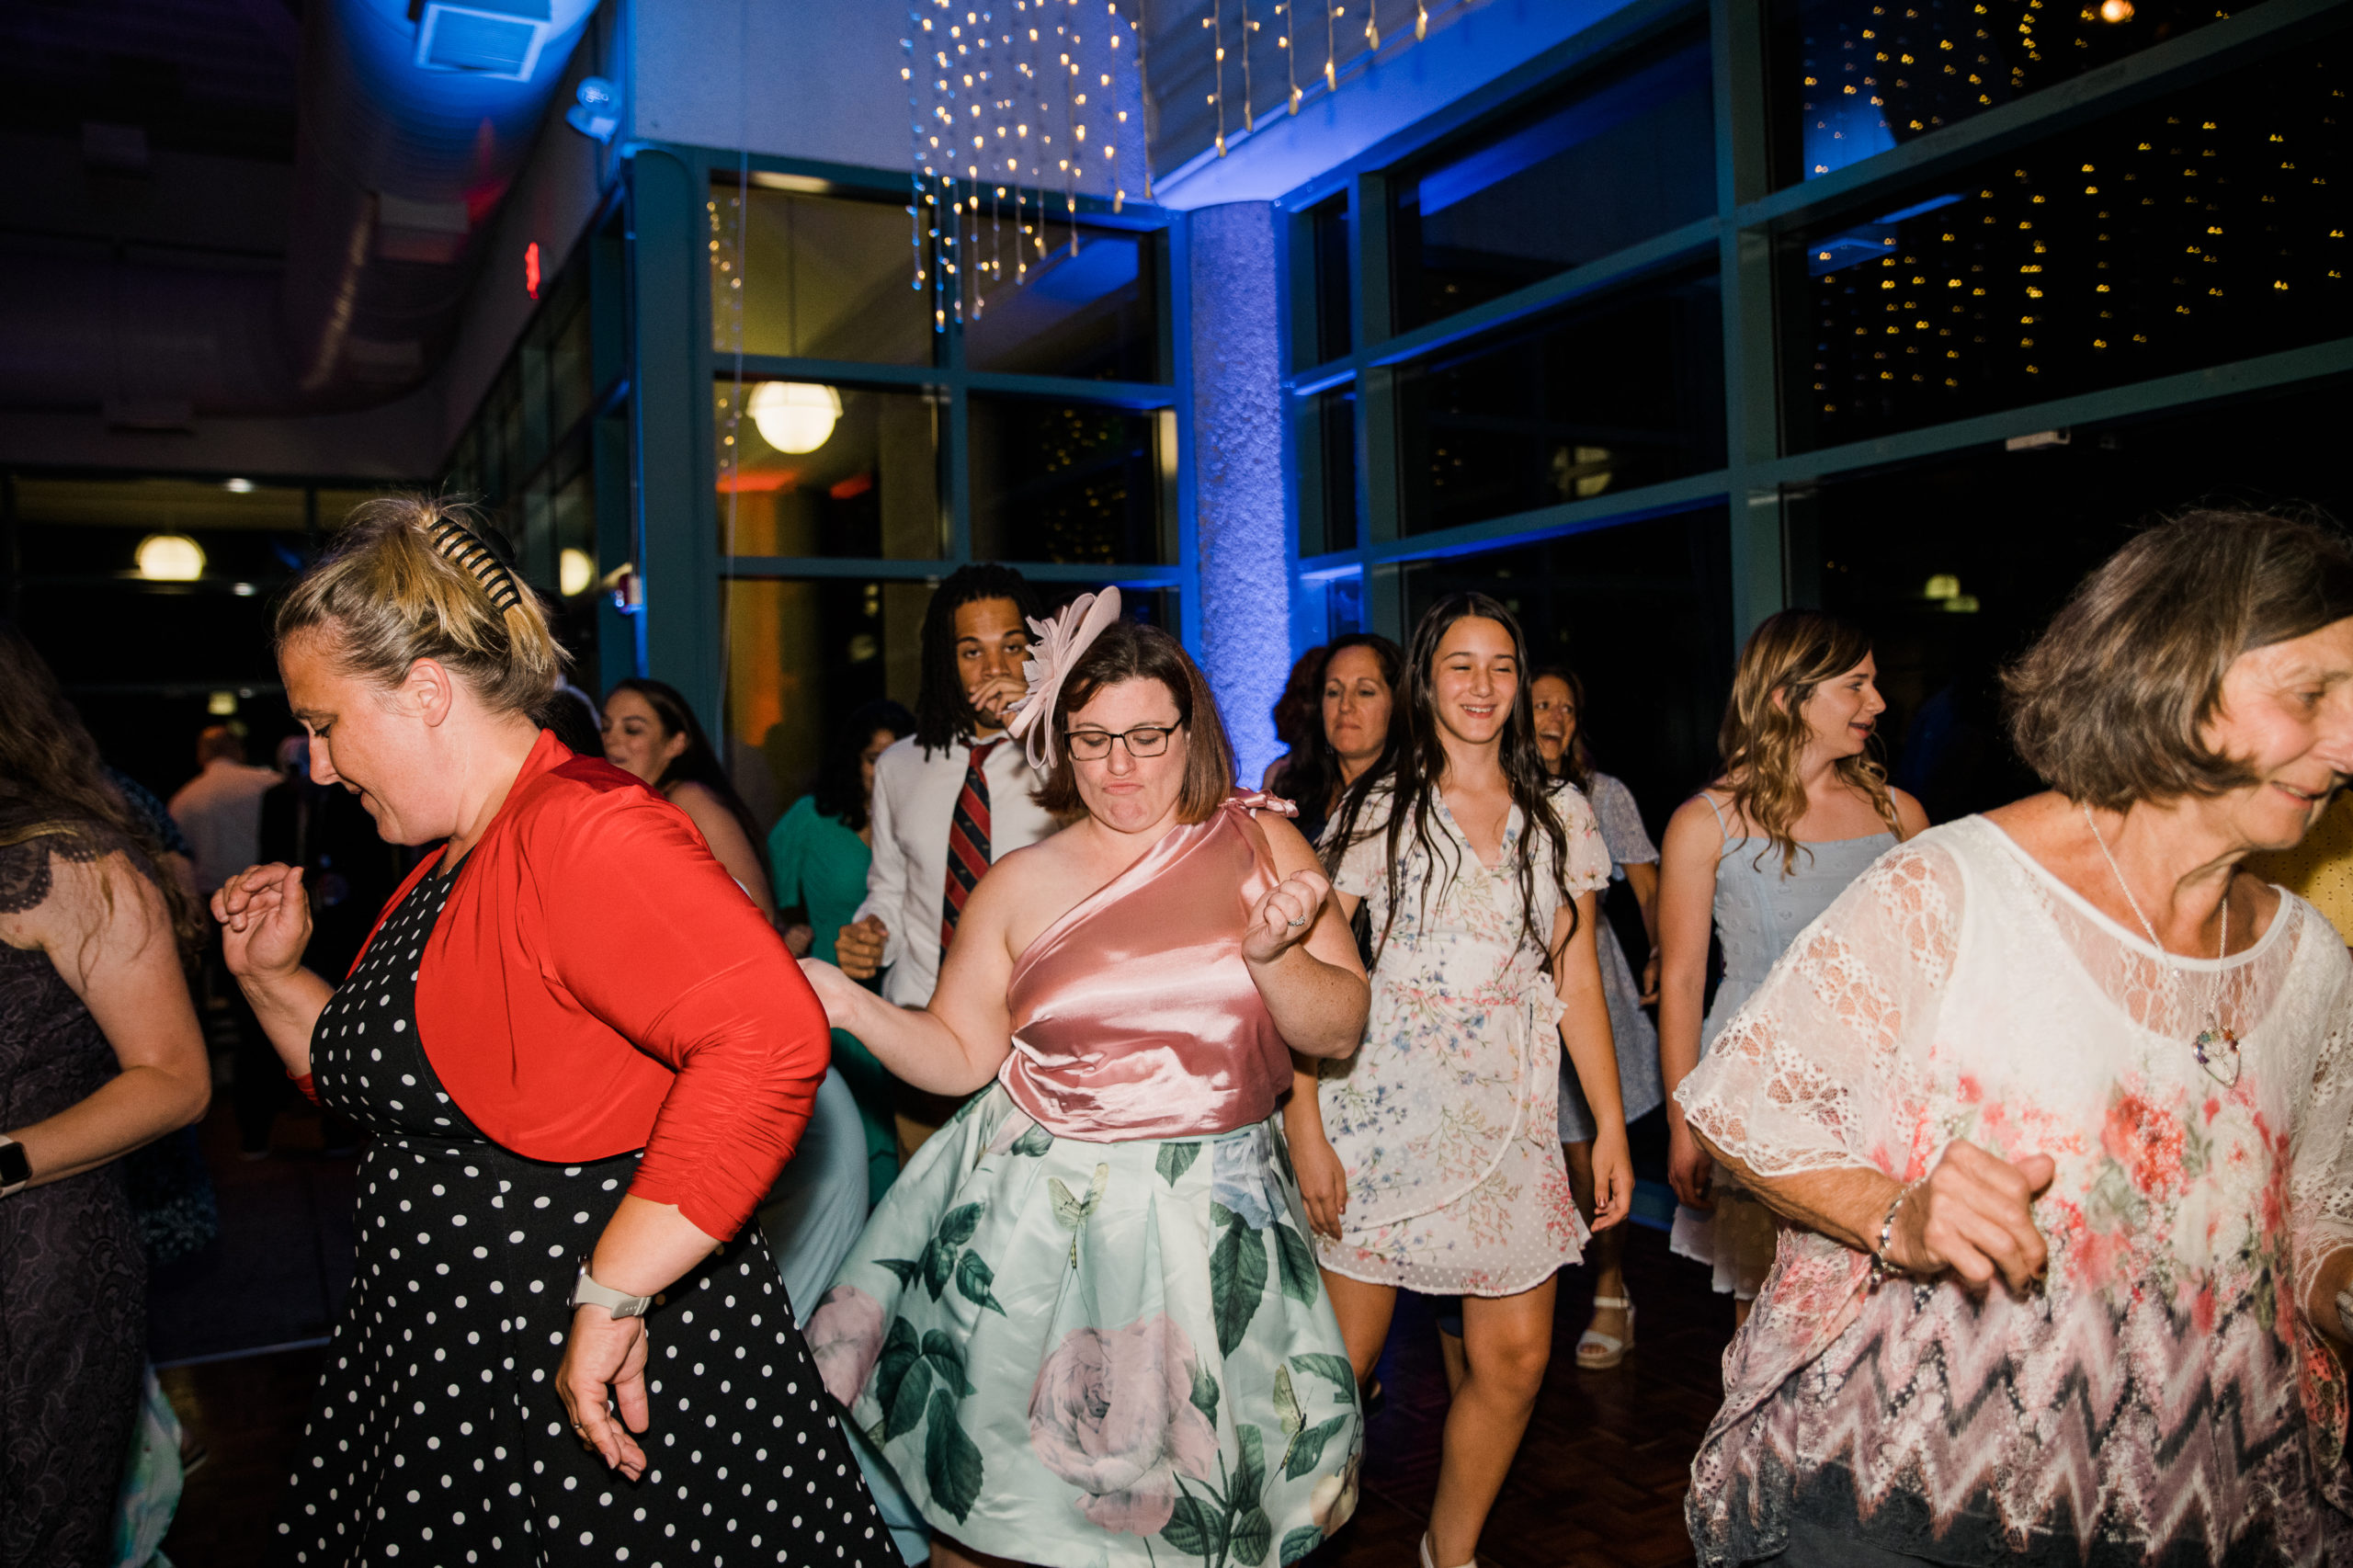 Guests dancing at a wedding reception at the Atrium at Meadowlark Botanical Gardens